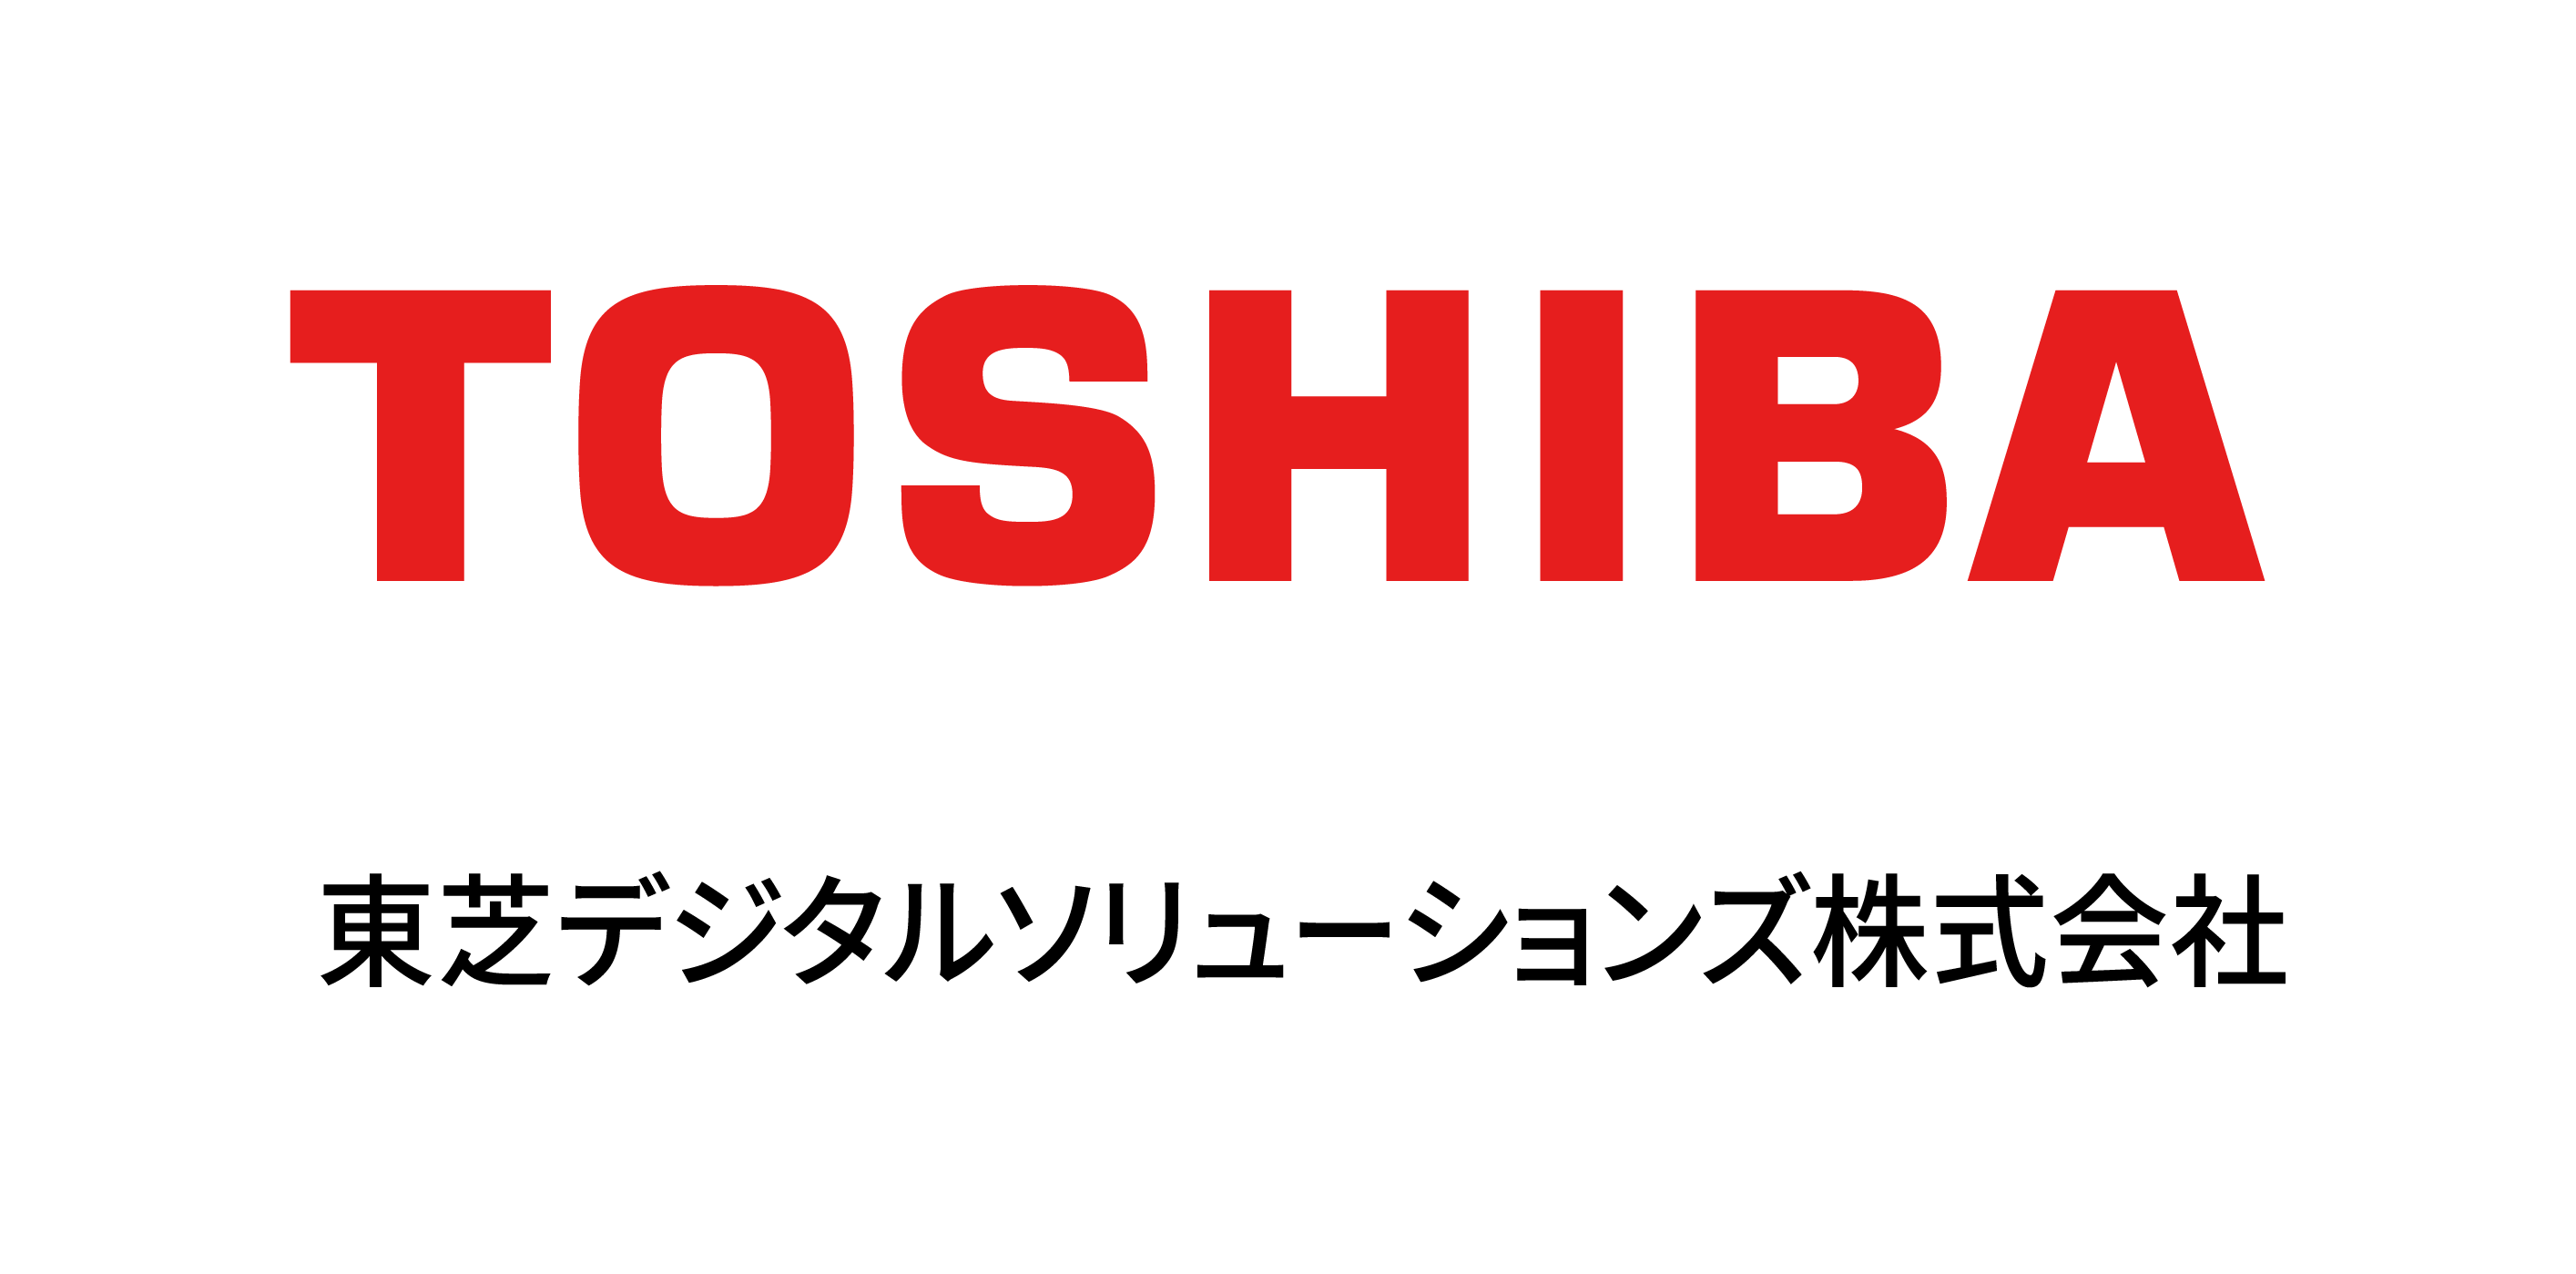 Toshiba Digital Solutions Corporation